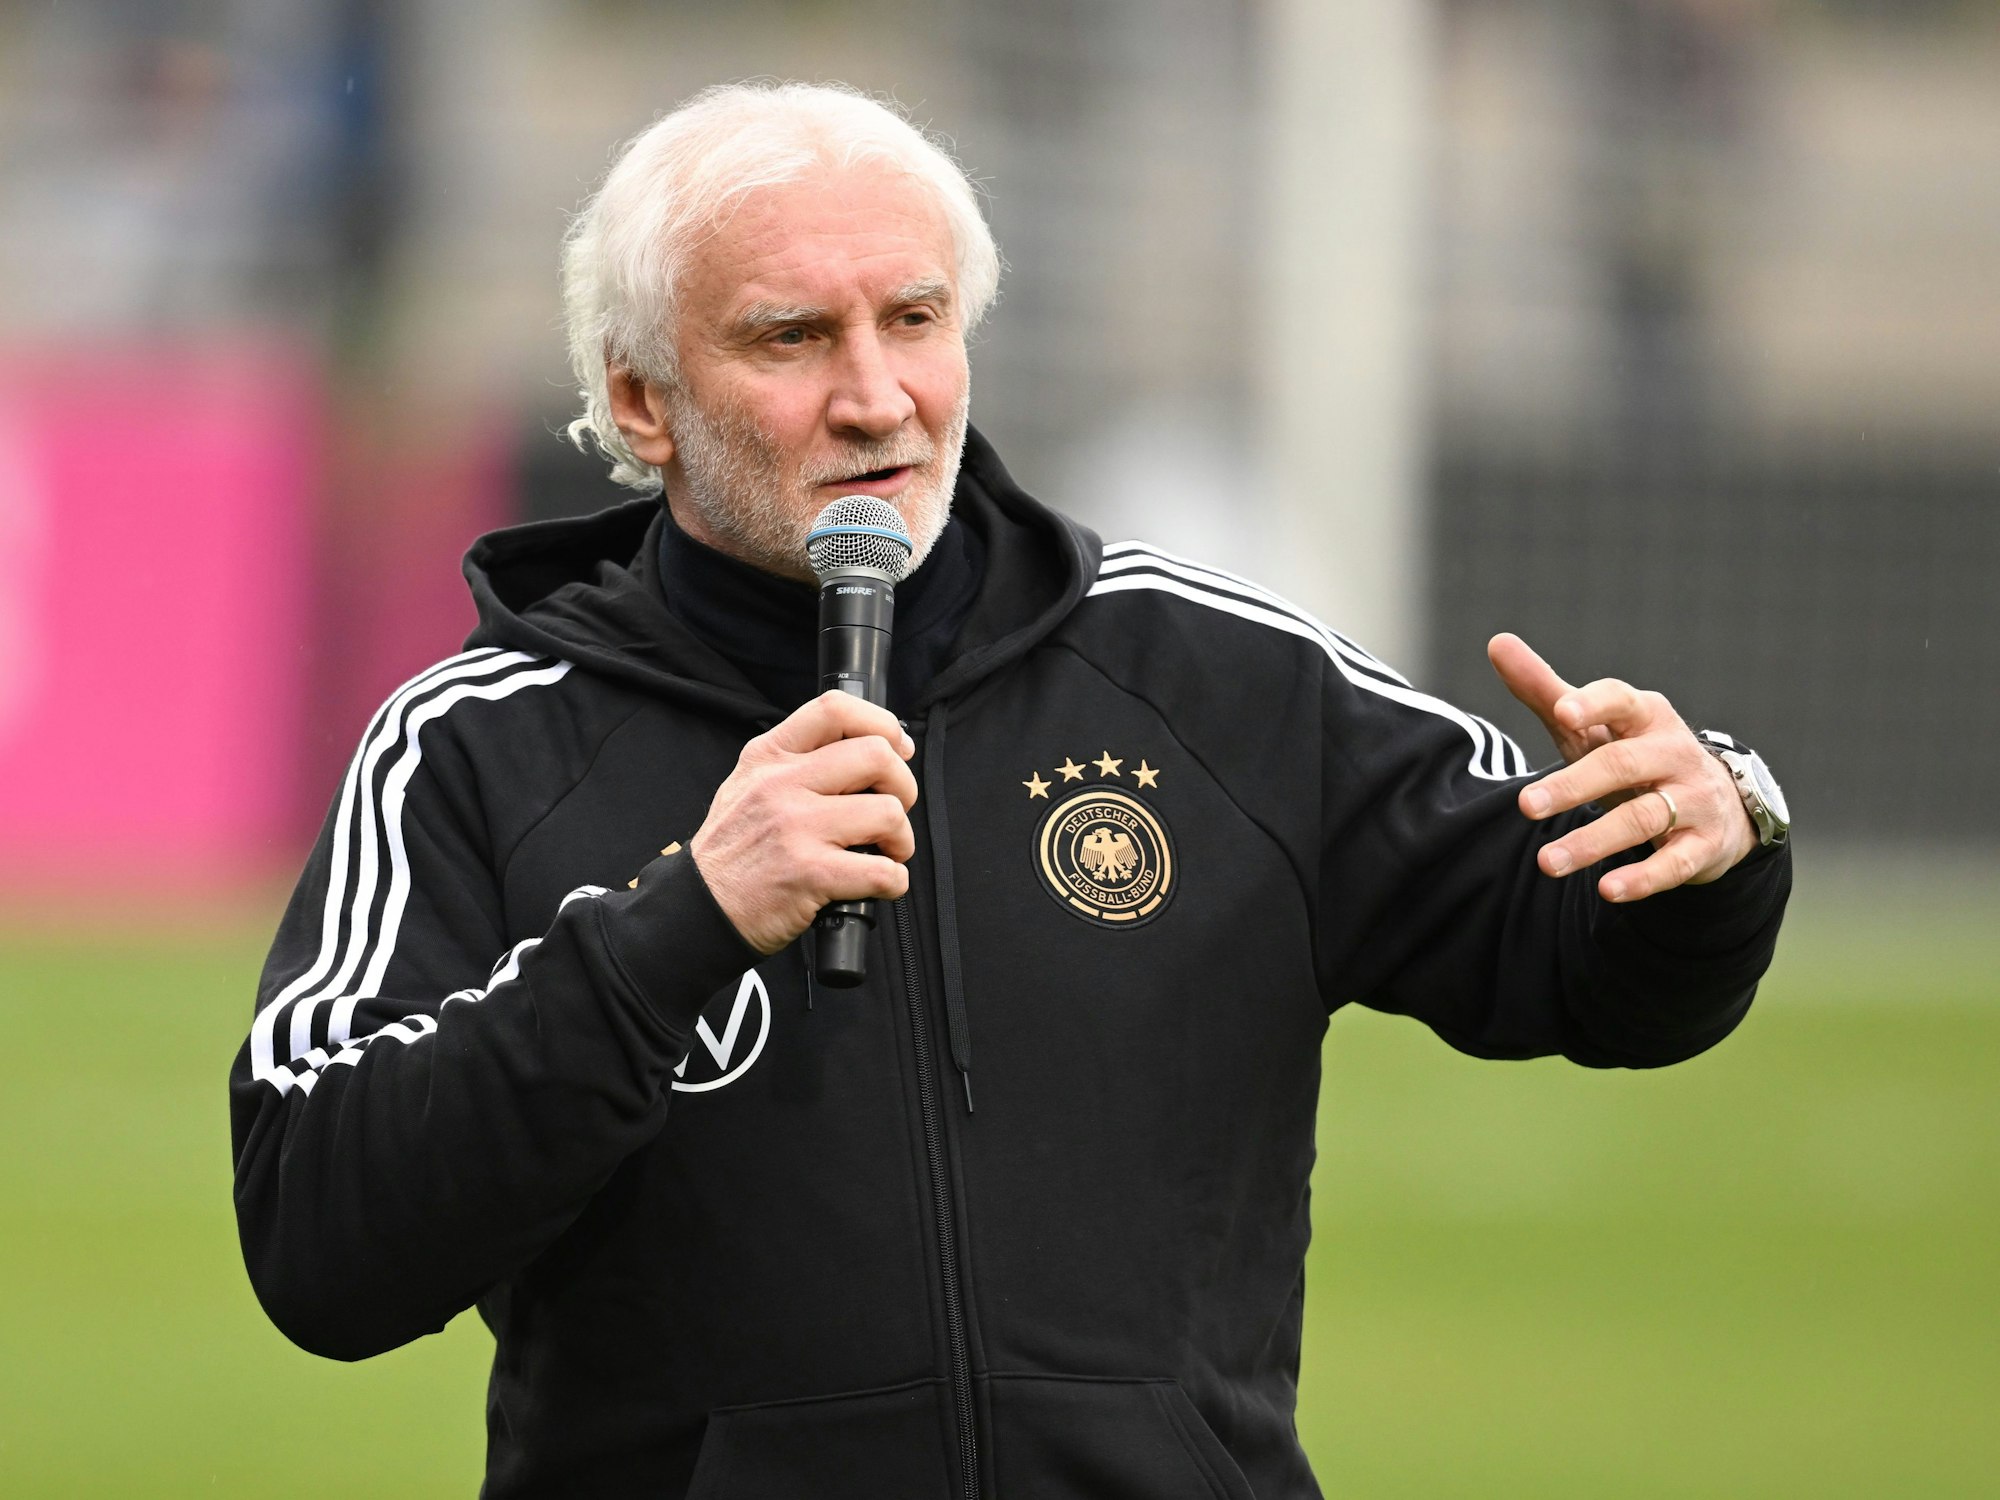 DFB-Sportdirektor Rudi Völler spricht zu Beginn des Trainings zu den Fans.